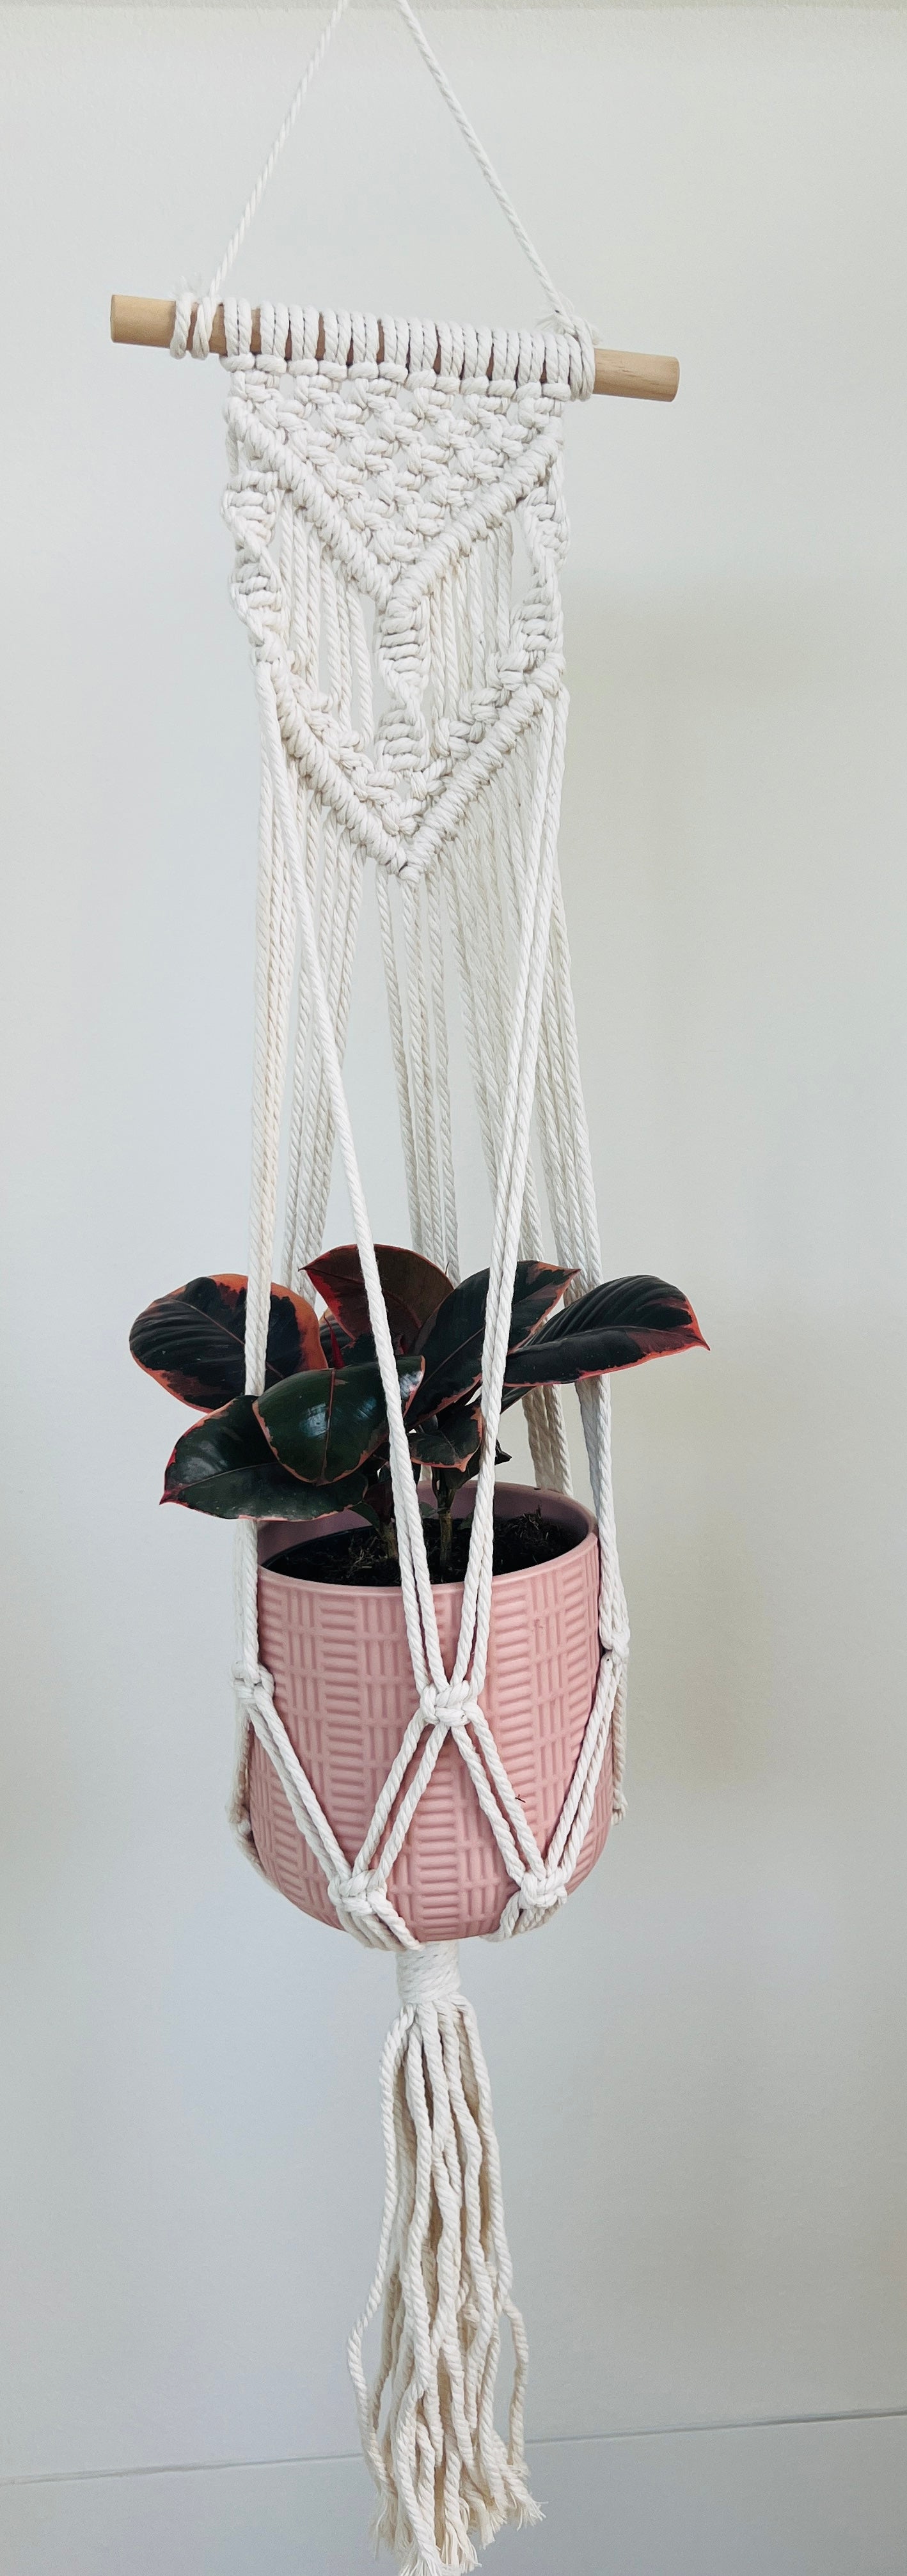 Ficus Elastica Ruby Rubber Indoor Plant 12cm in Pattern Ceramic Pot and Macramé